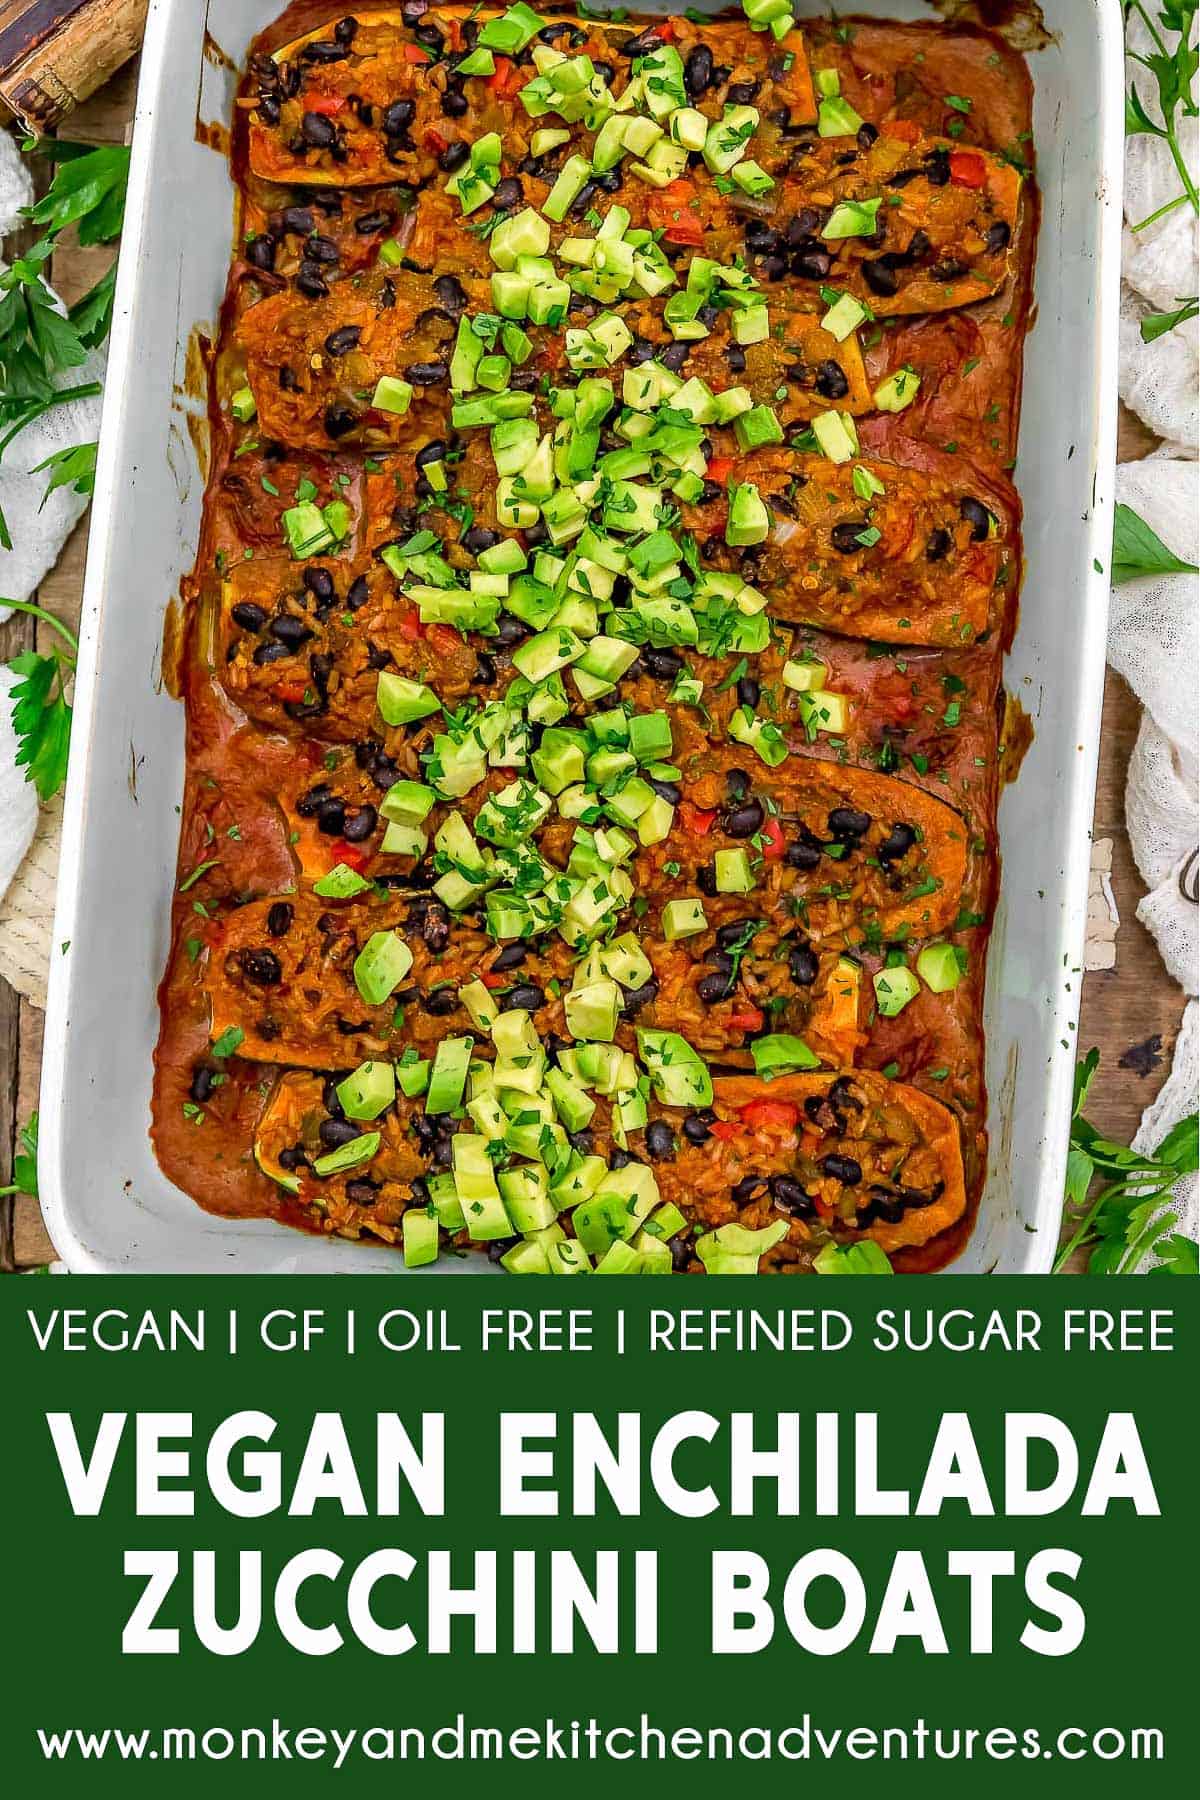 Vegan Enchilada Zucchini Boats with text description